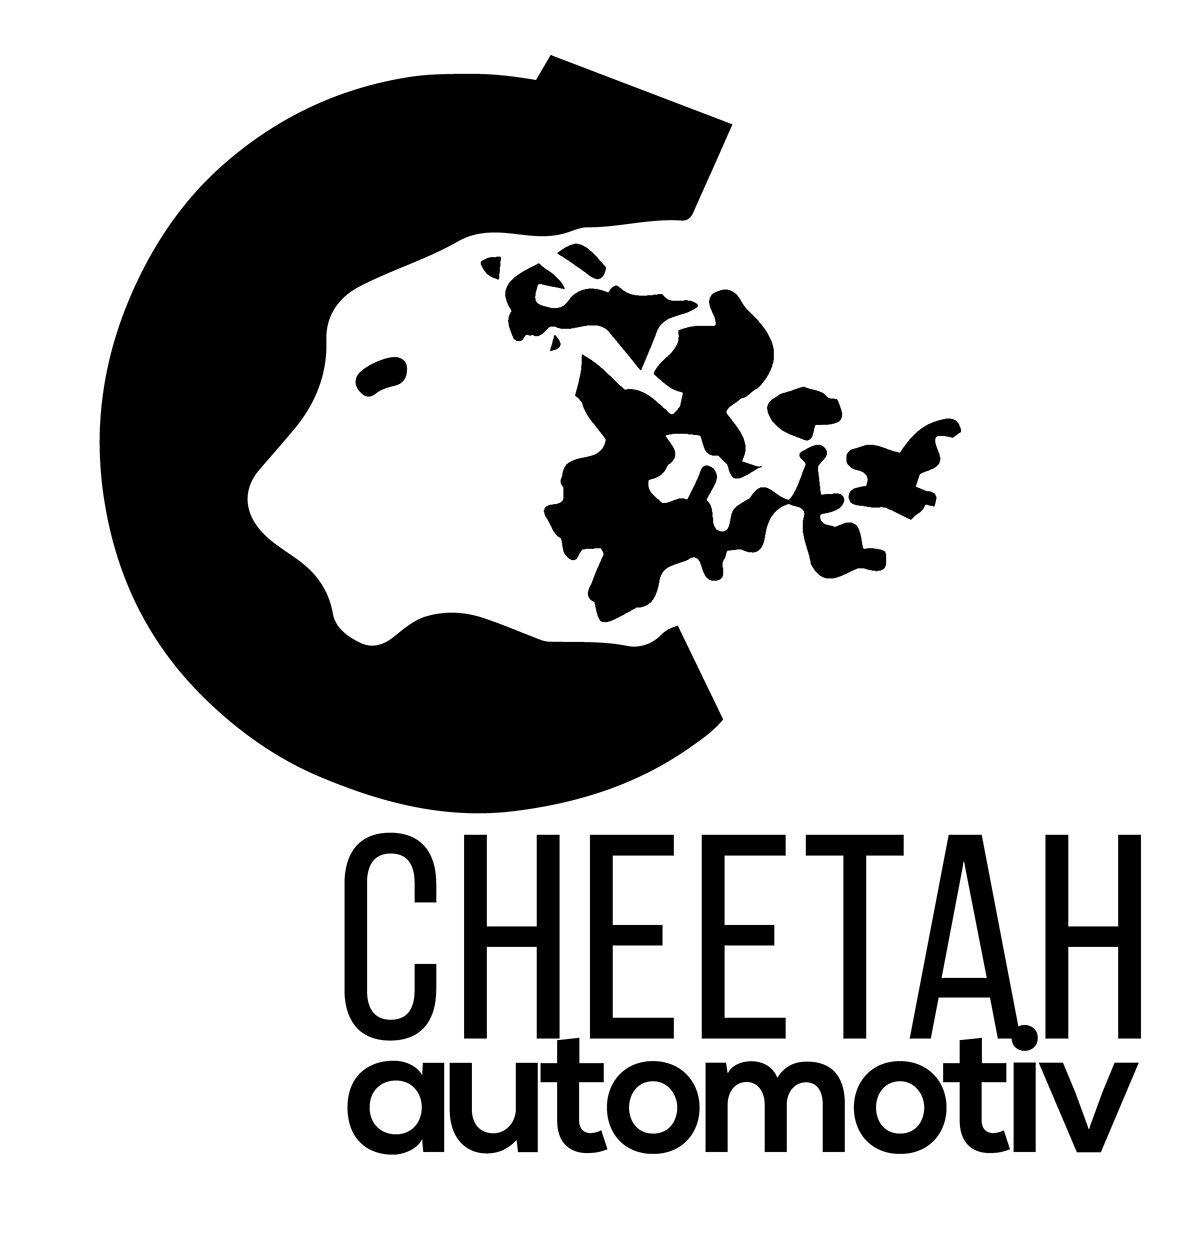 Cheetah Car Logo - Cheetah Automotiv Concept Logo on Behance